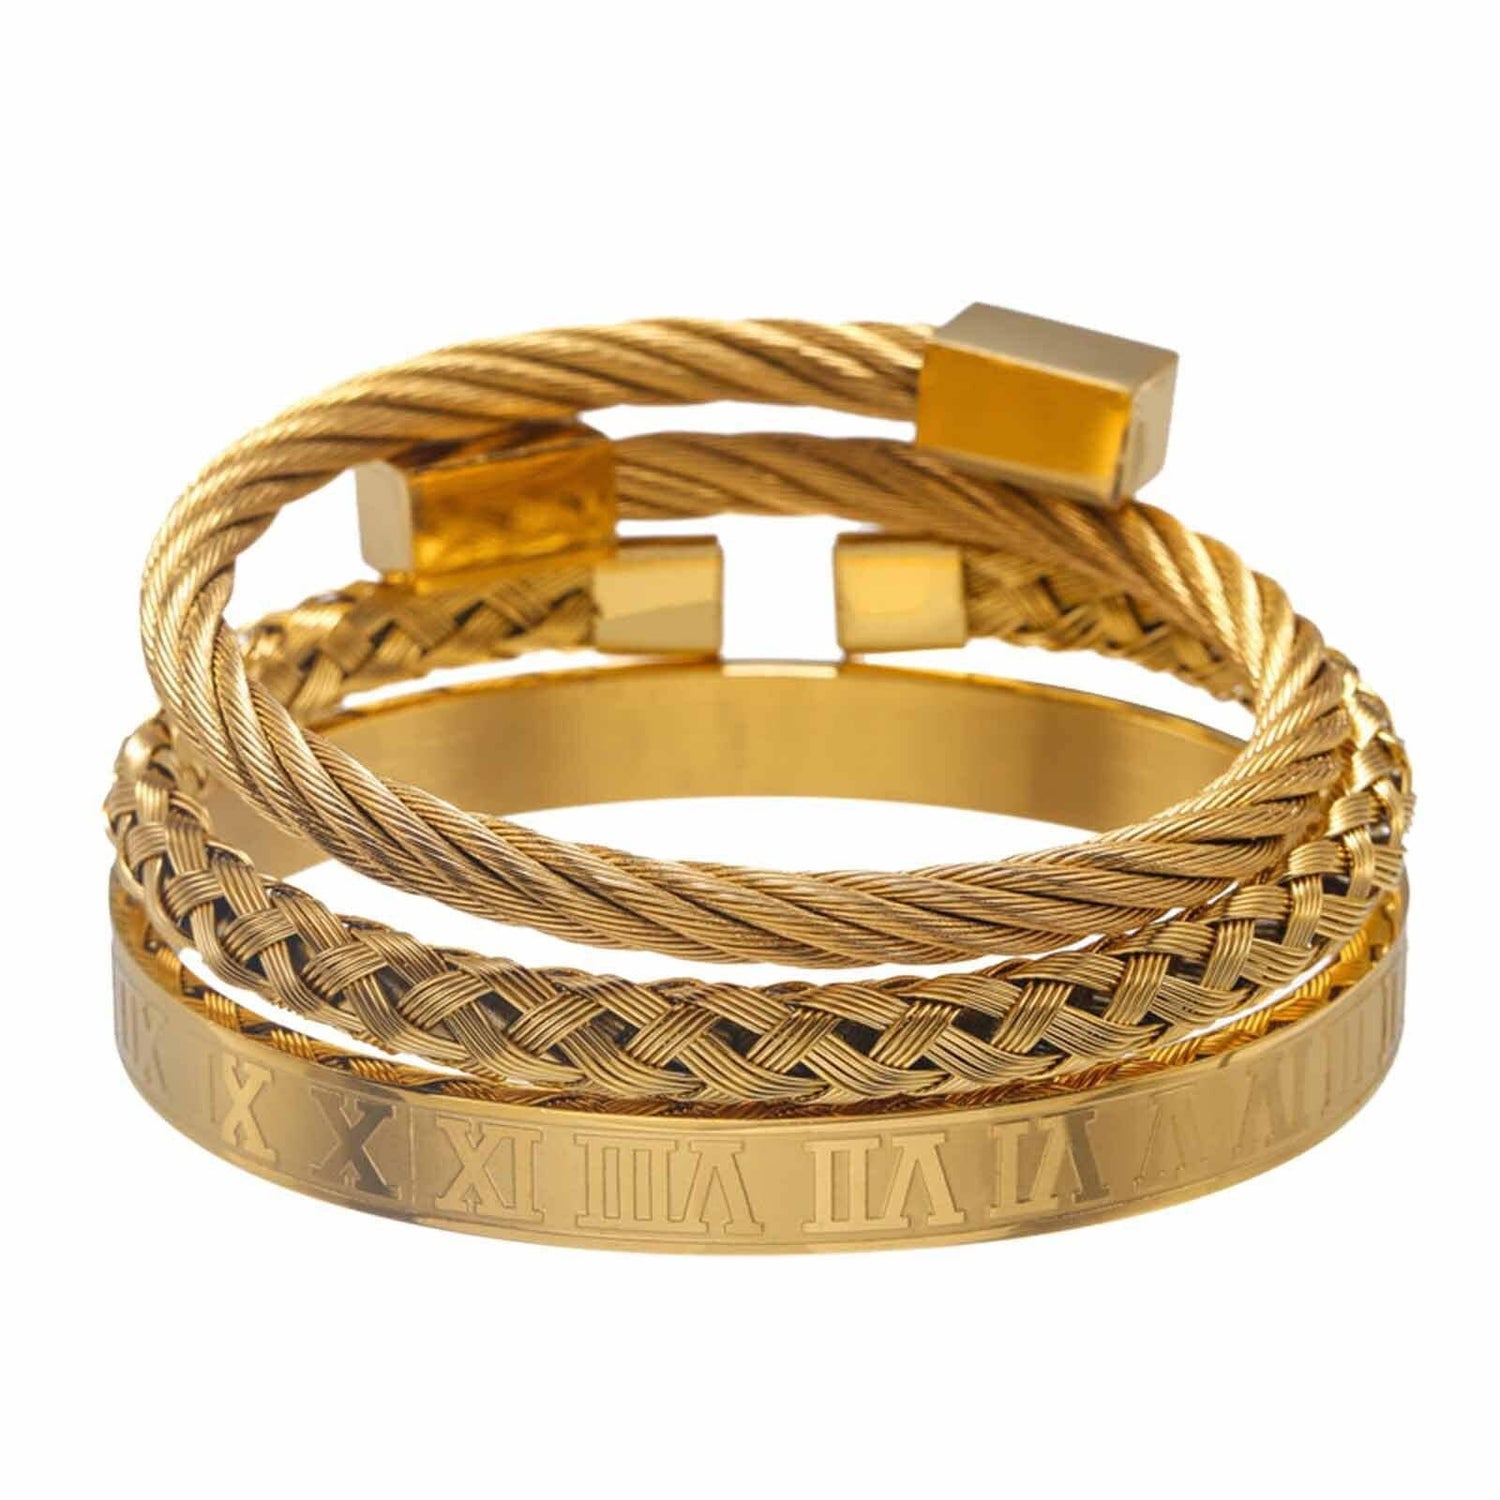  Roman men's bracelet, men's bracelet - 3pcs/Set Crown